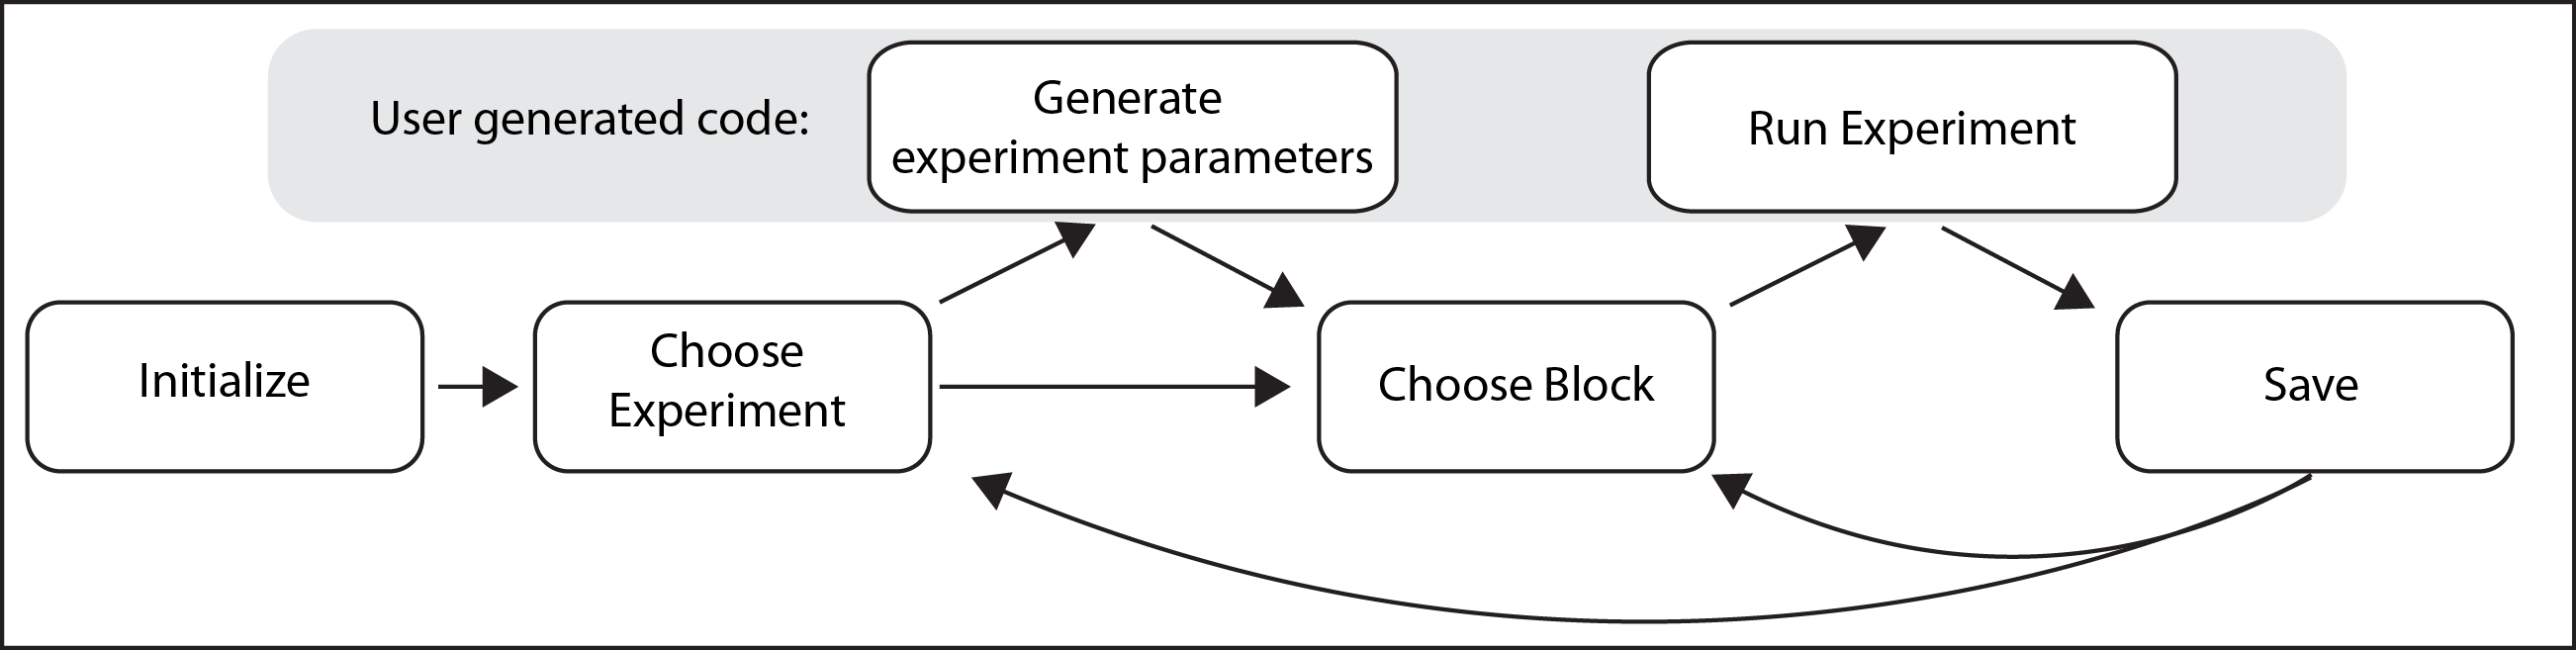 imgs/experiment_menu_schematic.png